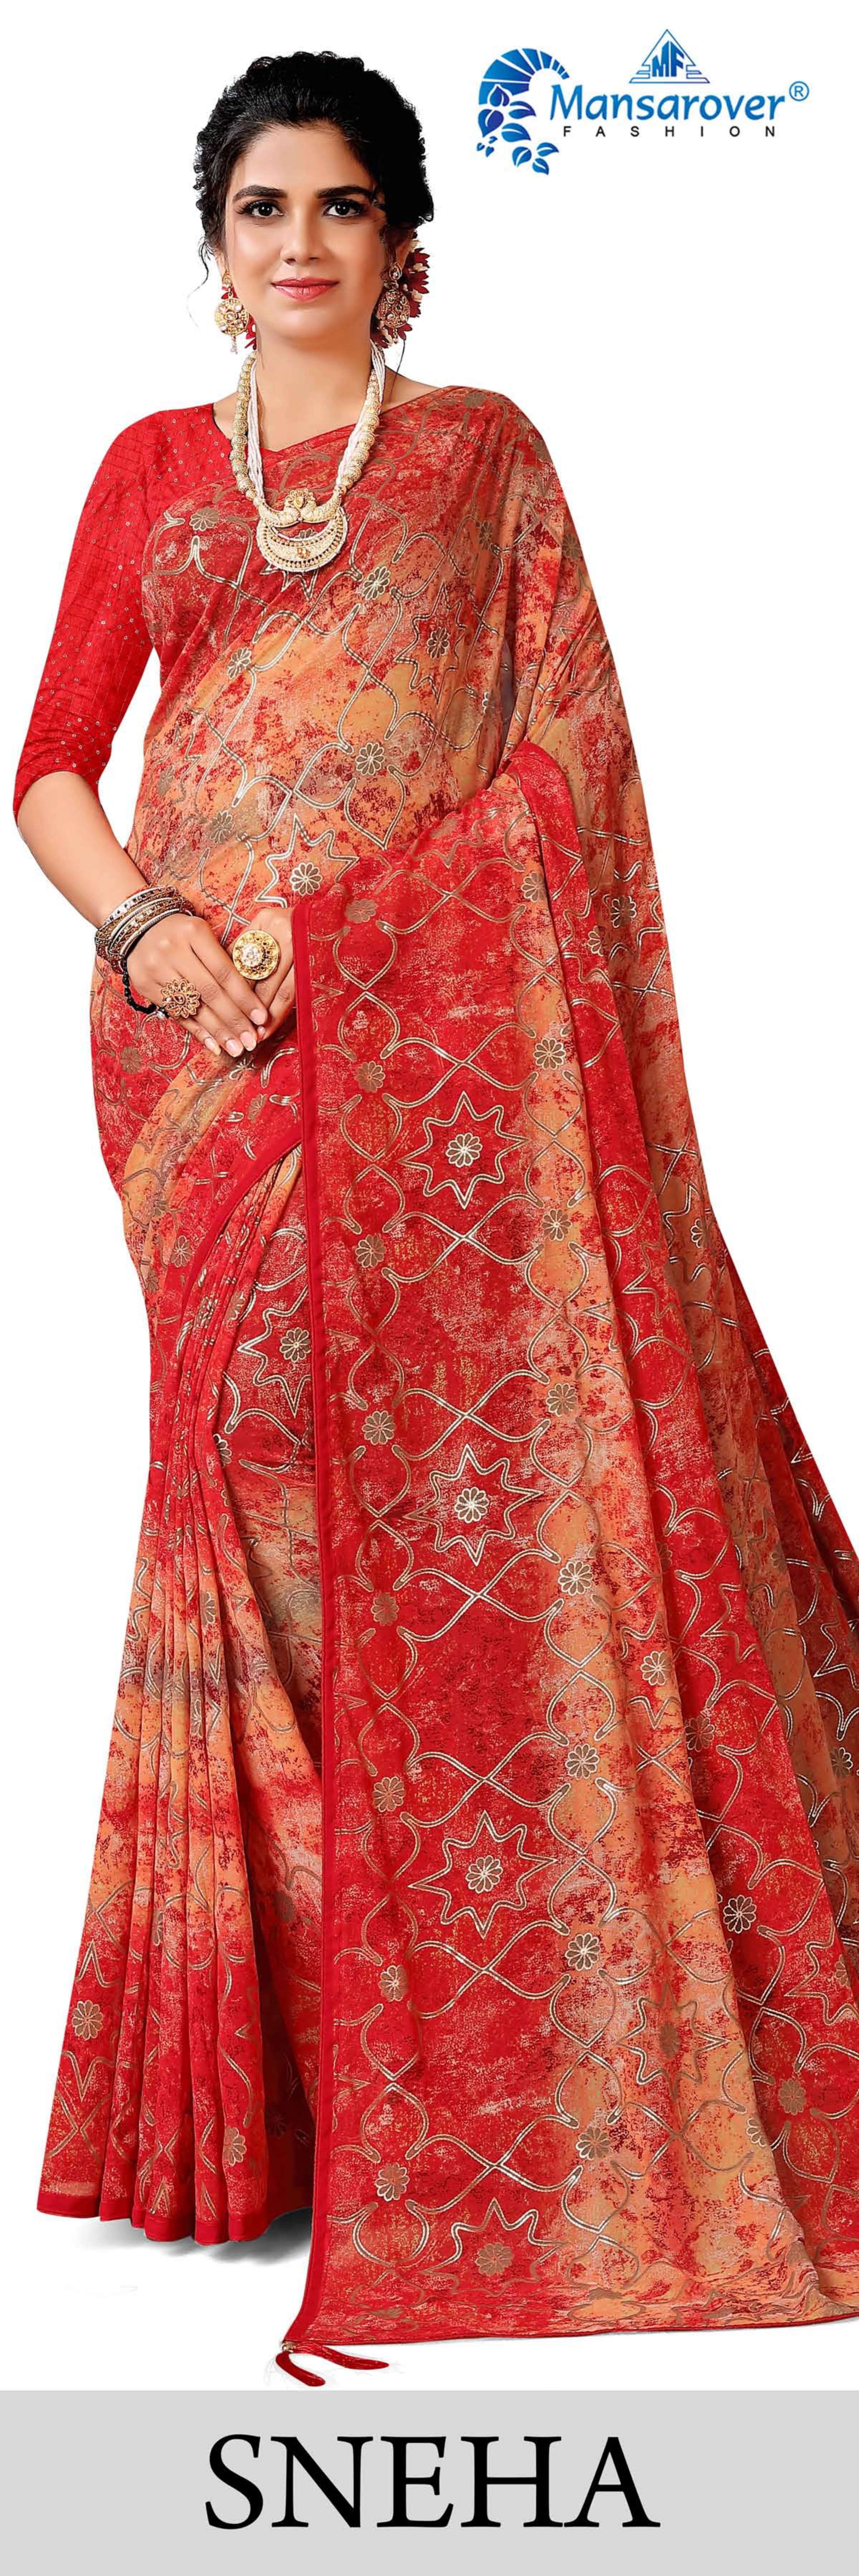 mansarover sneha Wetless foil Sequence blouse with latkan sarees 